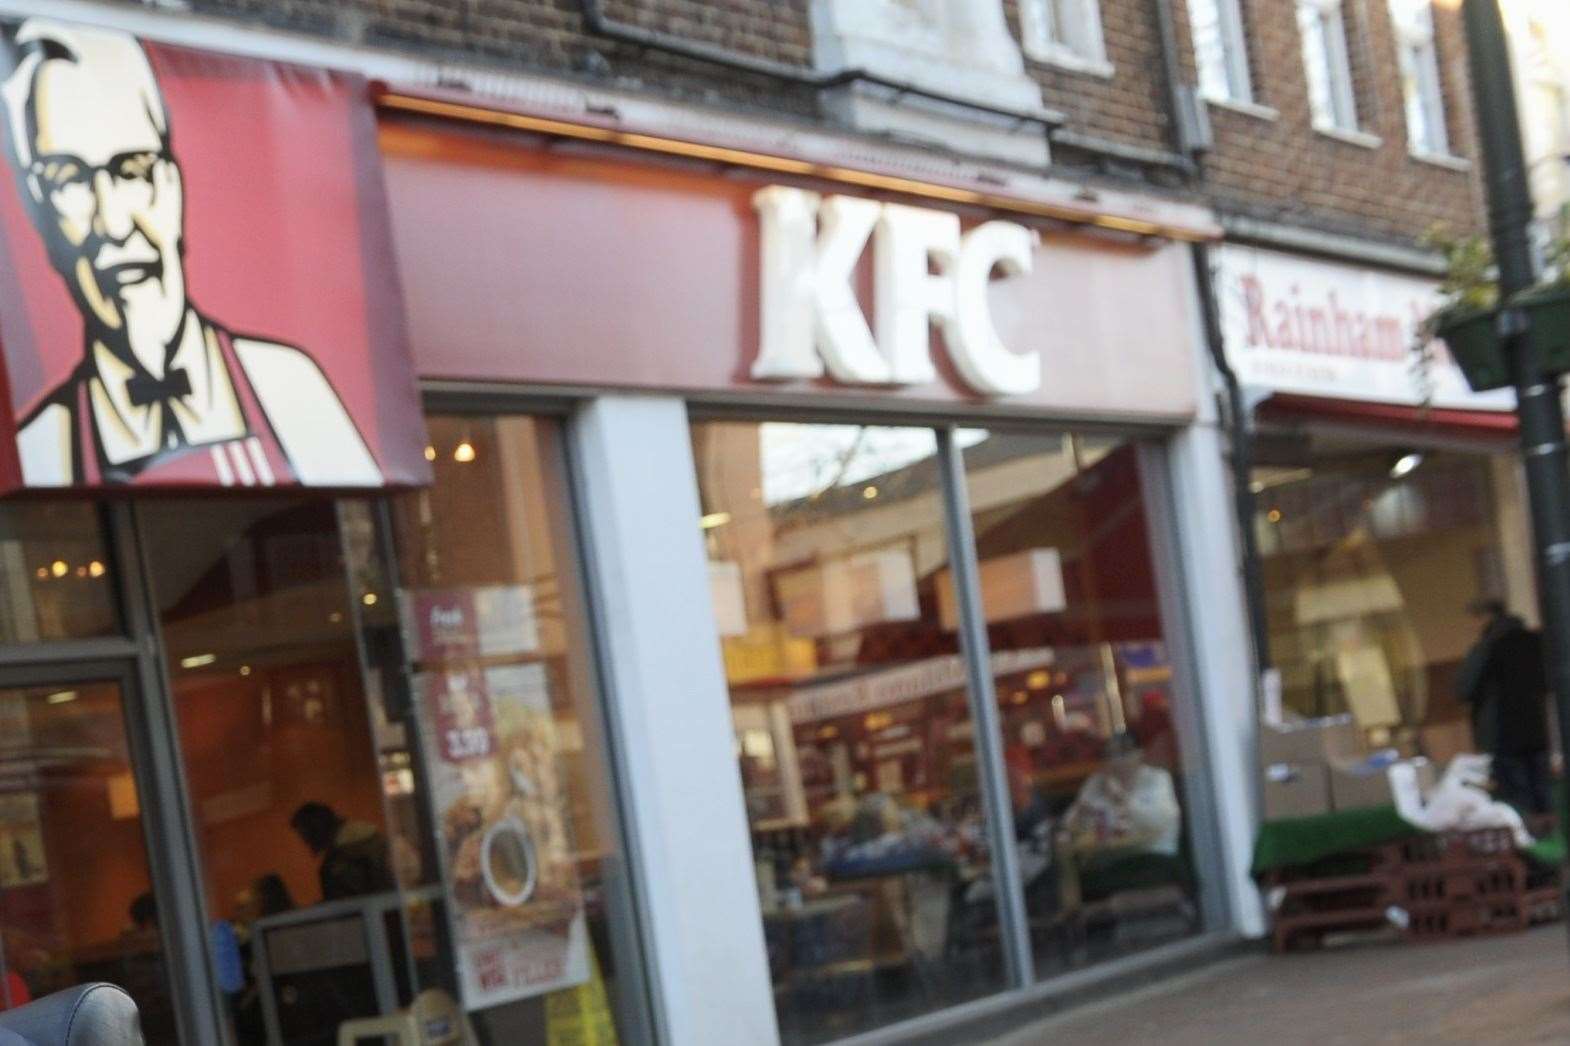 KFC in High Street, Chatham